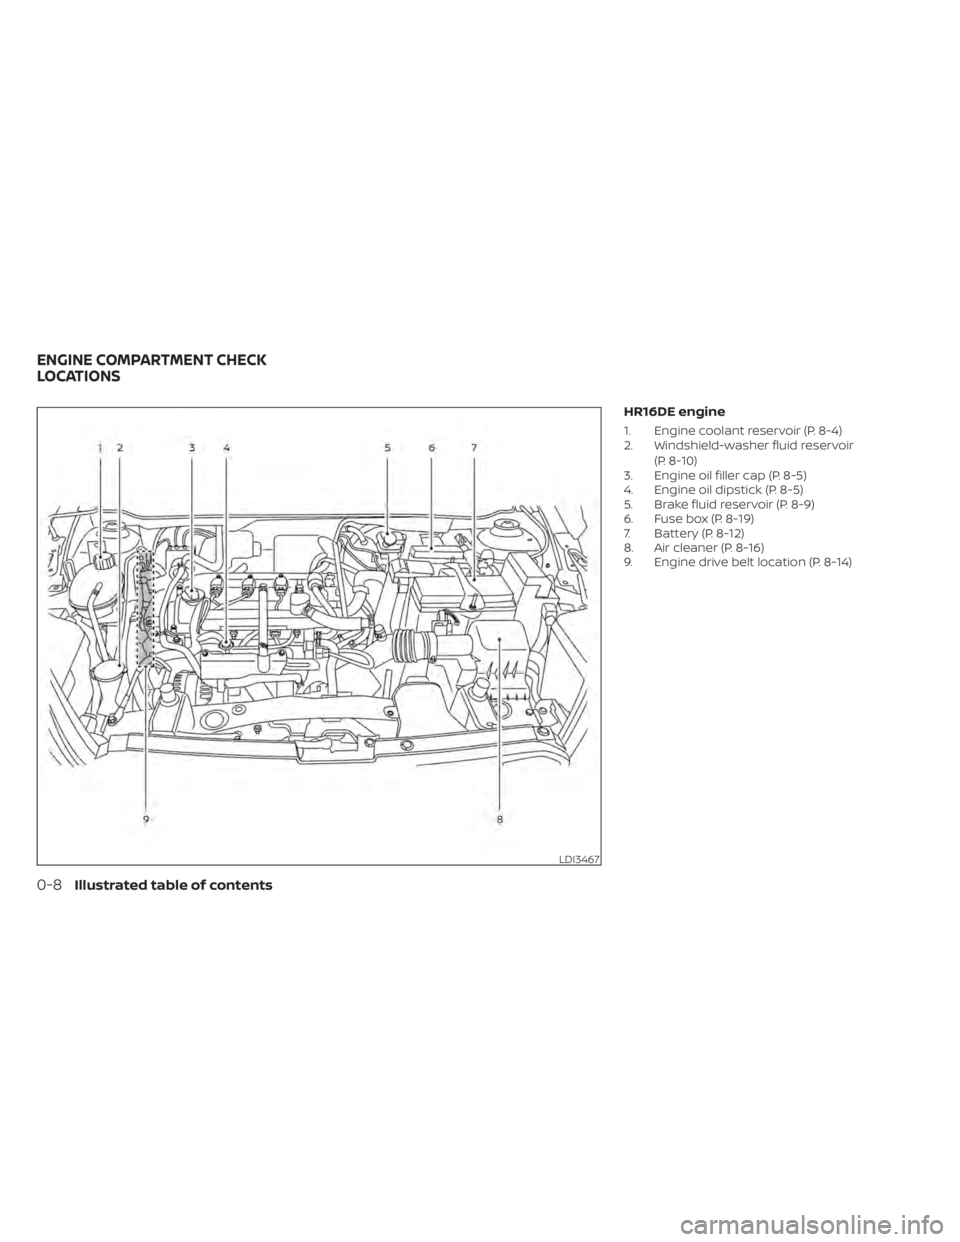 NISSAN KICKS 2021  Owners Manual HR16DE engine
1. Engine coolant reservoir (P. 8-4)
2. Windshield-washer fluid reservoir(P. 8-10)
3. Engine oil filler cap (P. 8-5)
4. Engine oil dipstick (P. 8-5)
5. Brake fluid reservoir (P. 8-9)
6. 